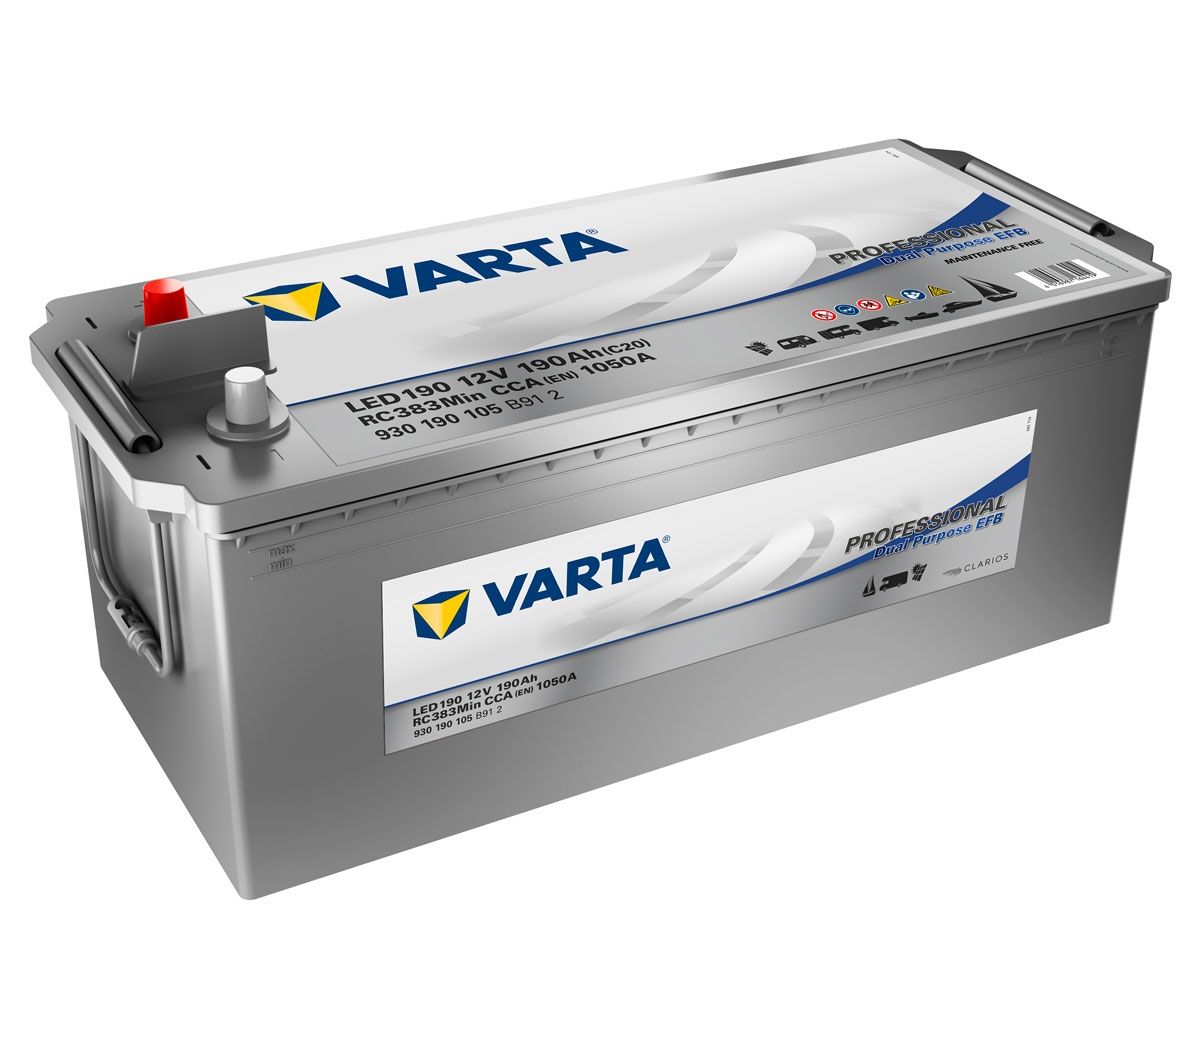 Akumulators VARTA PROFESSIONAL Dual Purpose EFB LED190 12V 190Ah 1050A(EN), 513x223x223 3/1